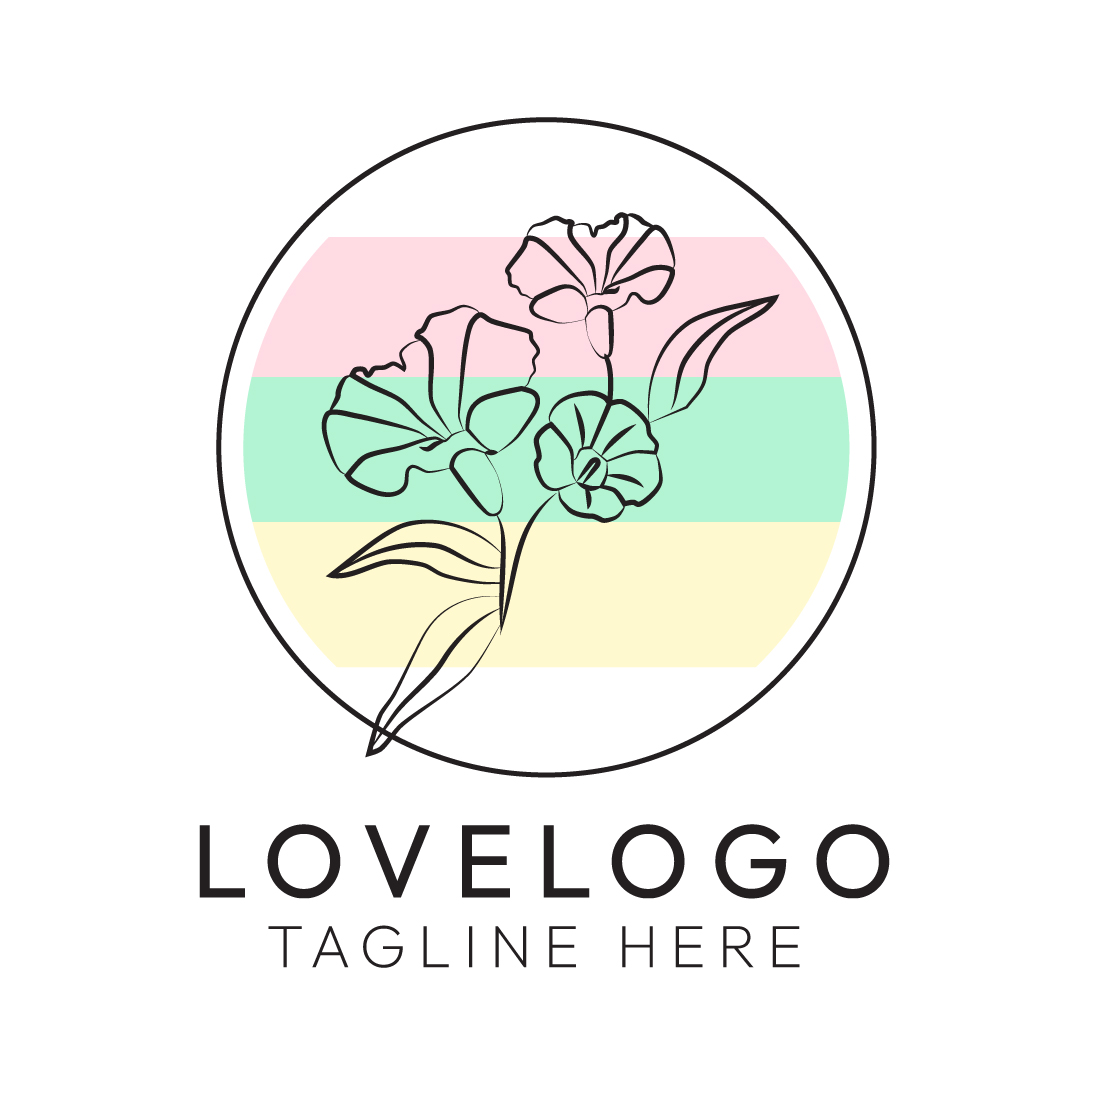 Minimalist Line Art Love, Wedding, Fashion, Beauty, and Nature Logo Design Bundle cover image.